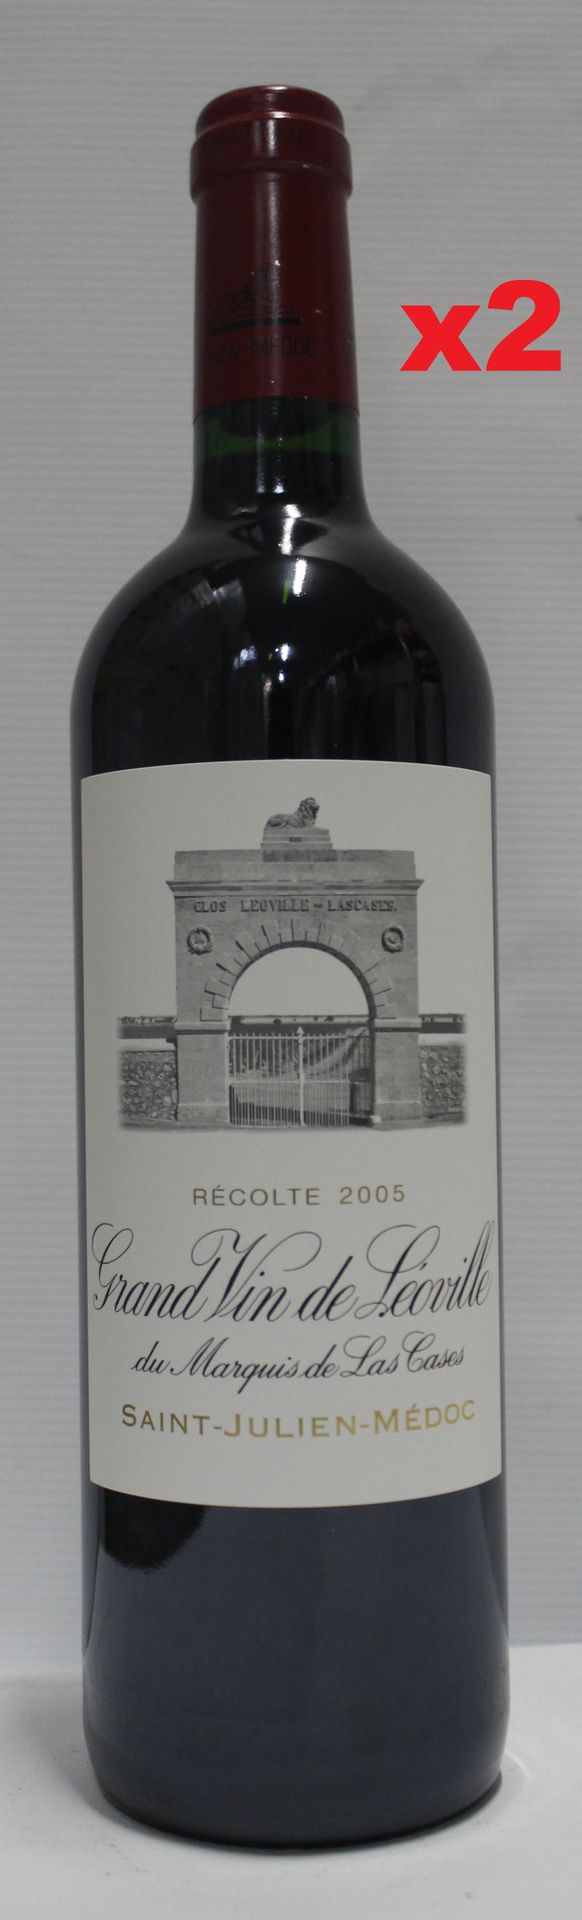 Null 2瓶75cl - 圣朱利安二级特等酒庄 - 莱维勒-拉斯-卡塞斯酒庄 - 红葡萄酒 2005

瓶子完美地保存在理想的温度下。